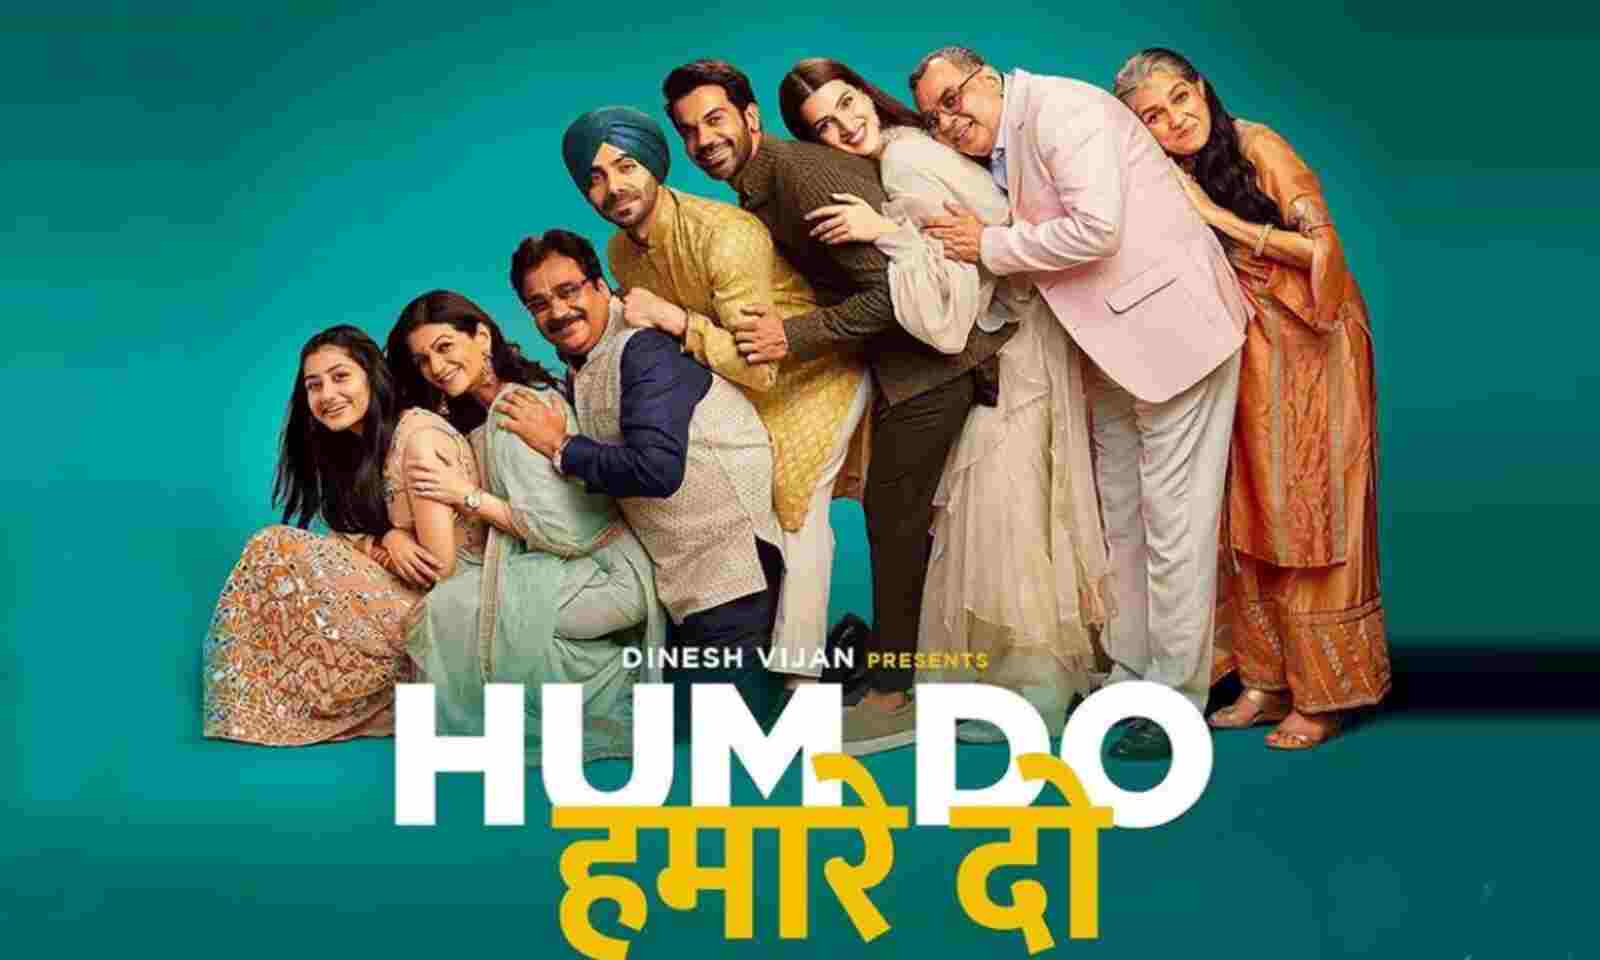 Hum Do Hamare Do (2021) Movie Reviews in Hindi - Cast, Release Date, Story, Actress Name, Etc Information? | हम दो हमारे दो फिल्म कब रिलीज़ होगी, जाने फिल्म की कहानी